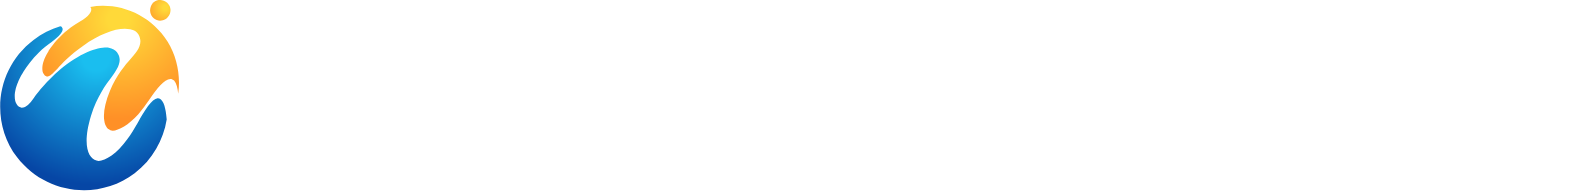 World Holdings Logo groß für dunkle Hintergründe (transparentes PNG)